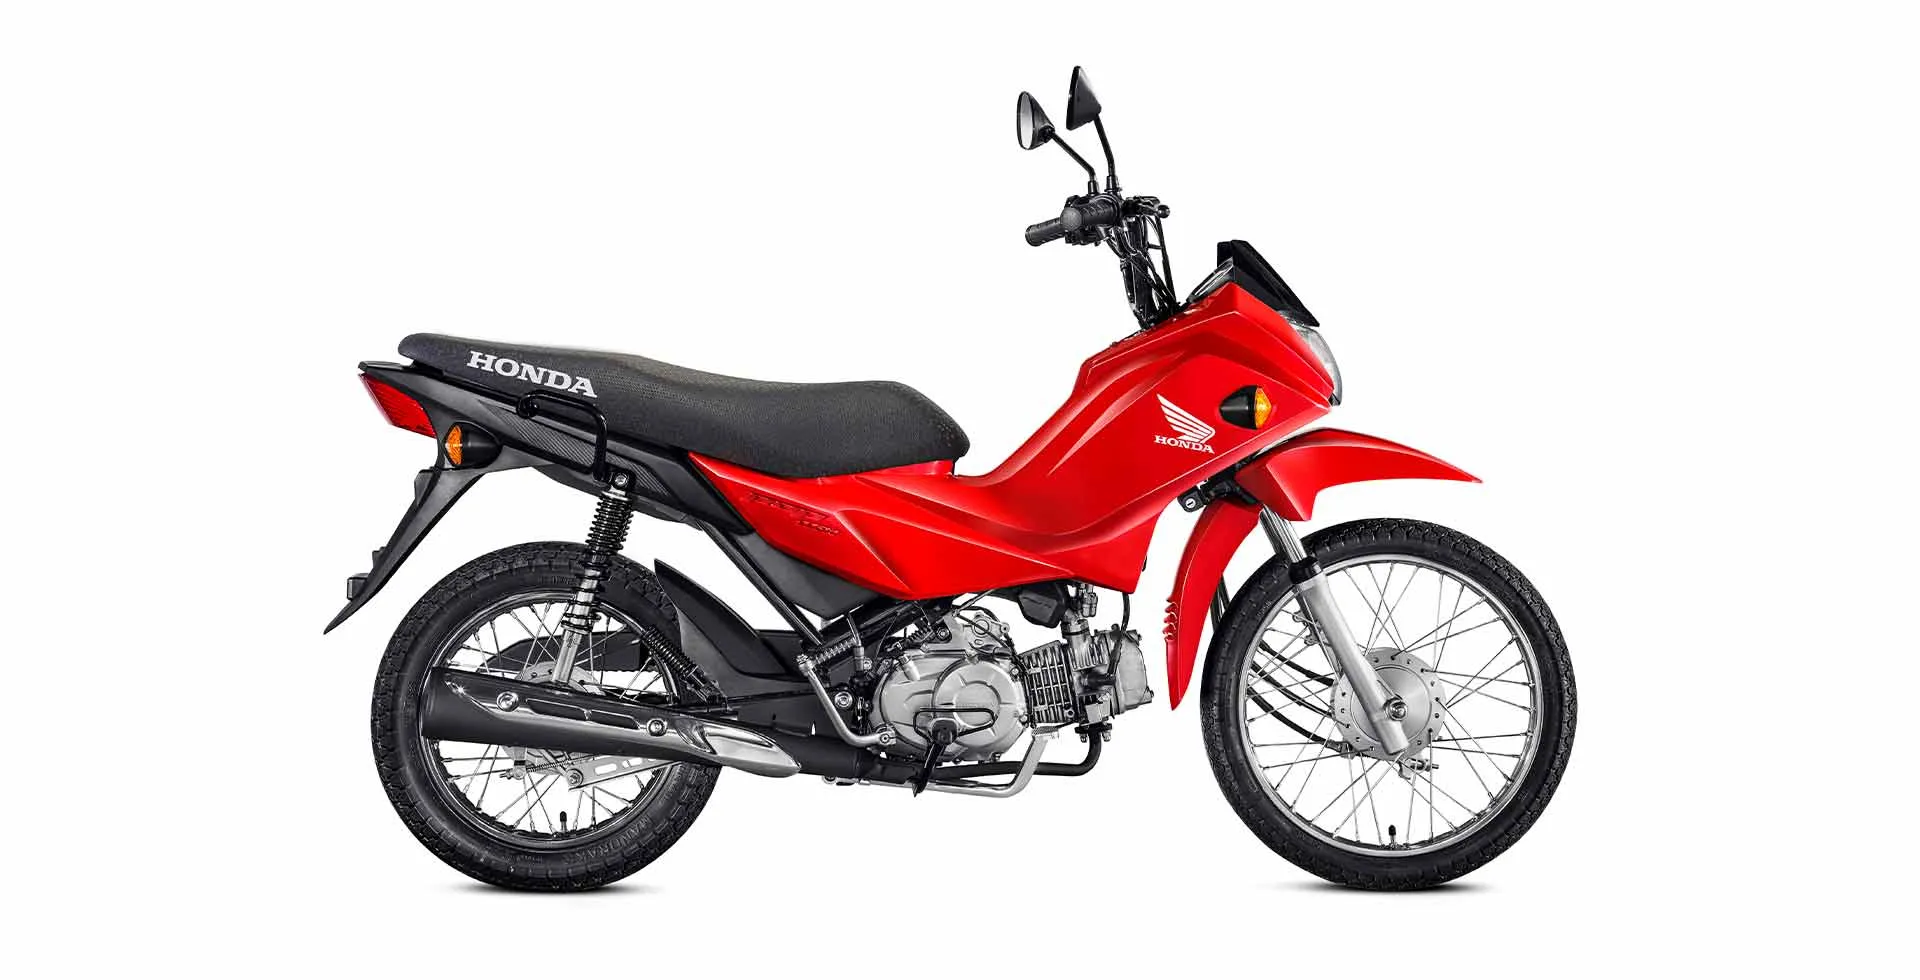 moto mais barata do brasil